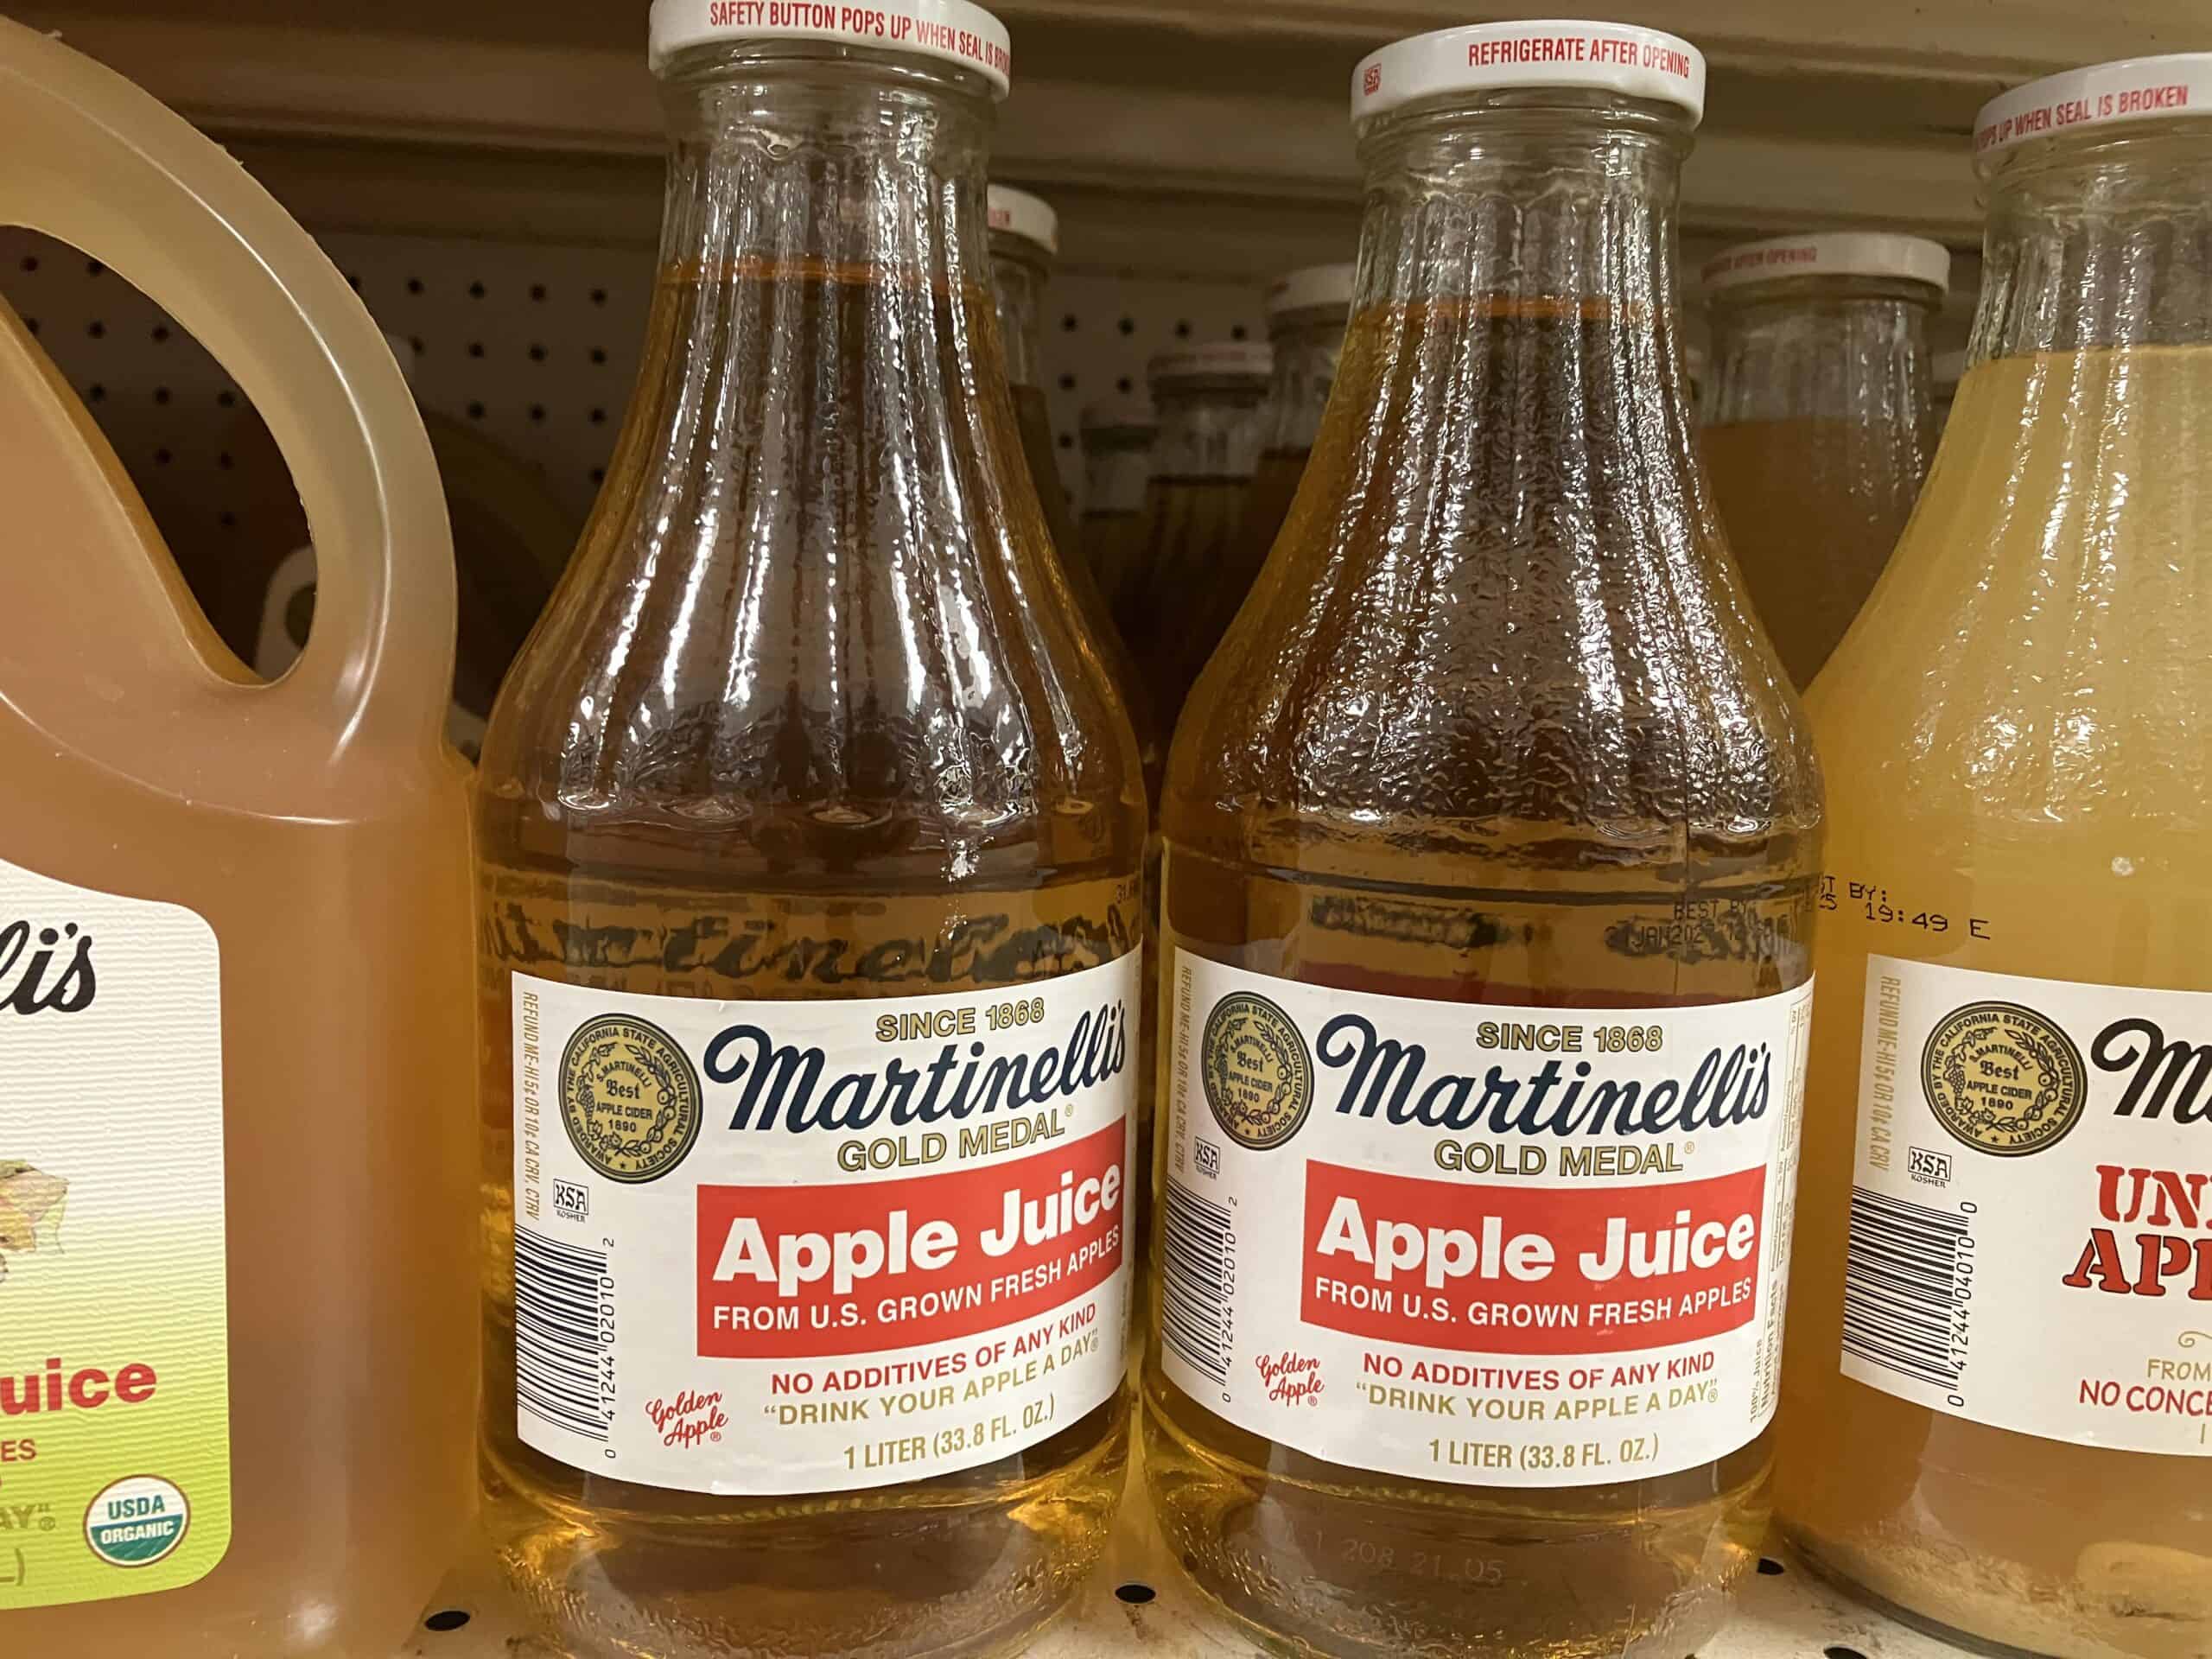 Martinelli's Gold Medal apple juice